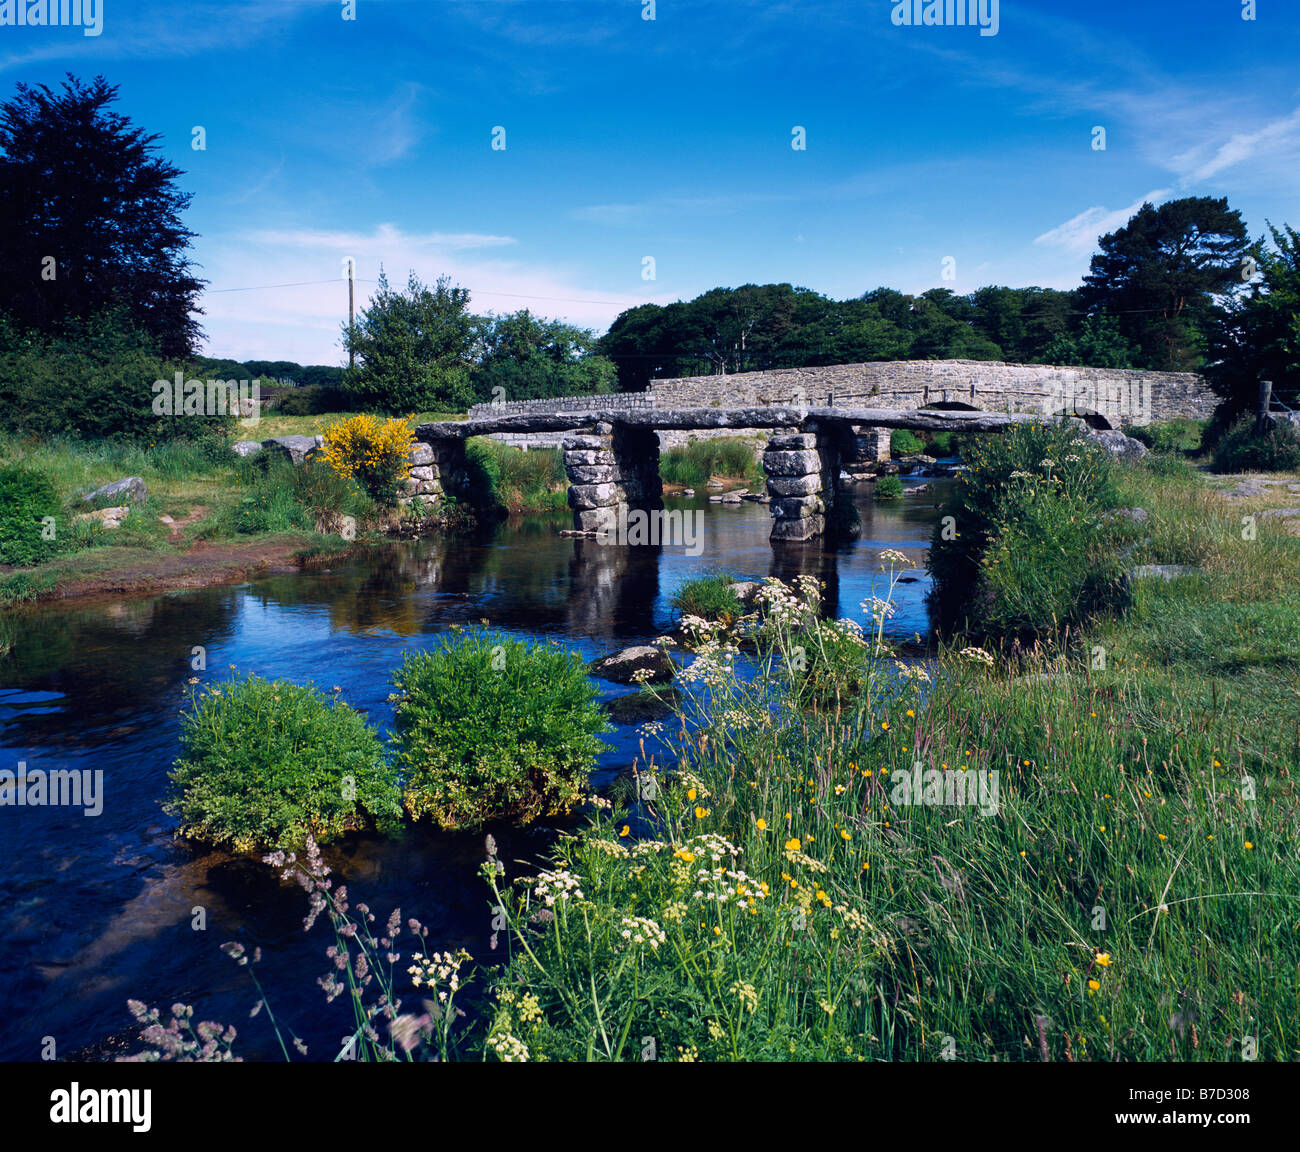 The old clapper bridge over the East Dart River at Postbridge in Dartmoor National Park, Devon, England. Stock Photo